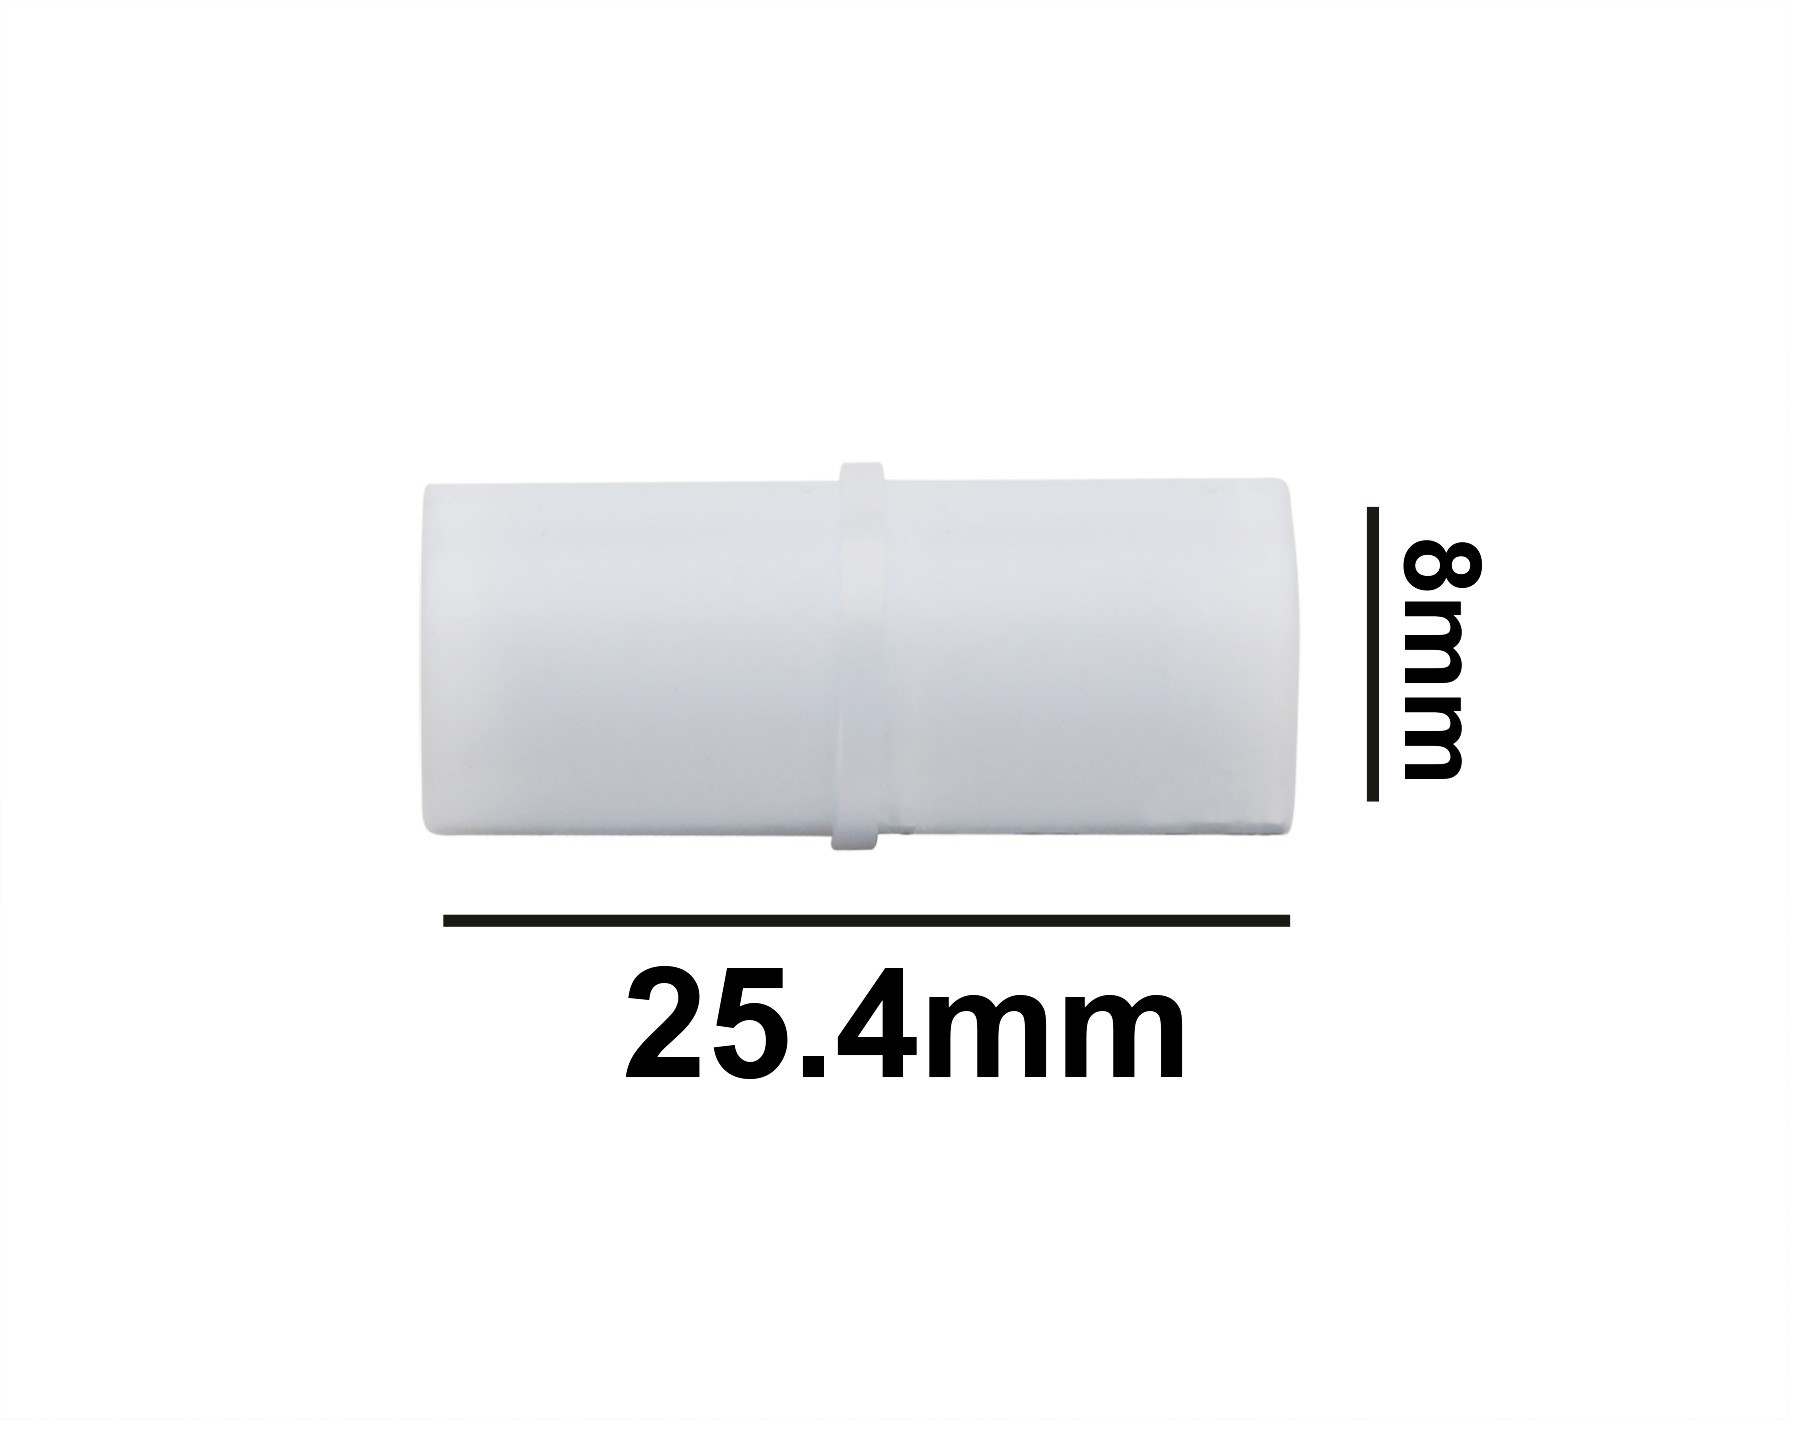 SP Bel-Art Spinbar Teflon Cylindrical Magnetic Stirring Bar; 25.4 x 8mm, White